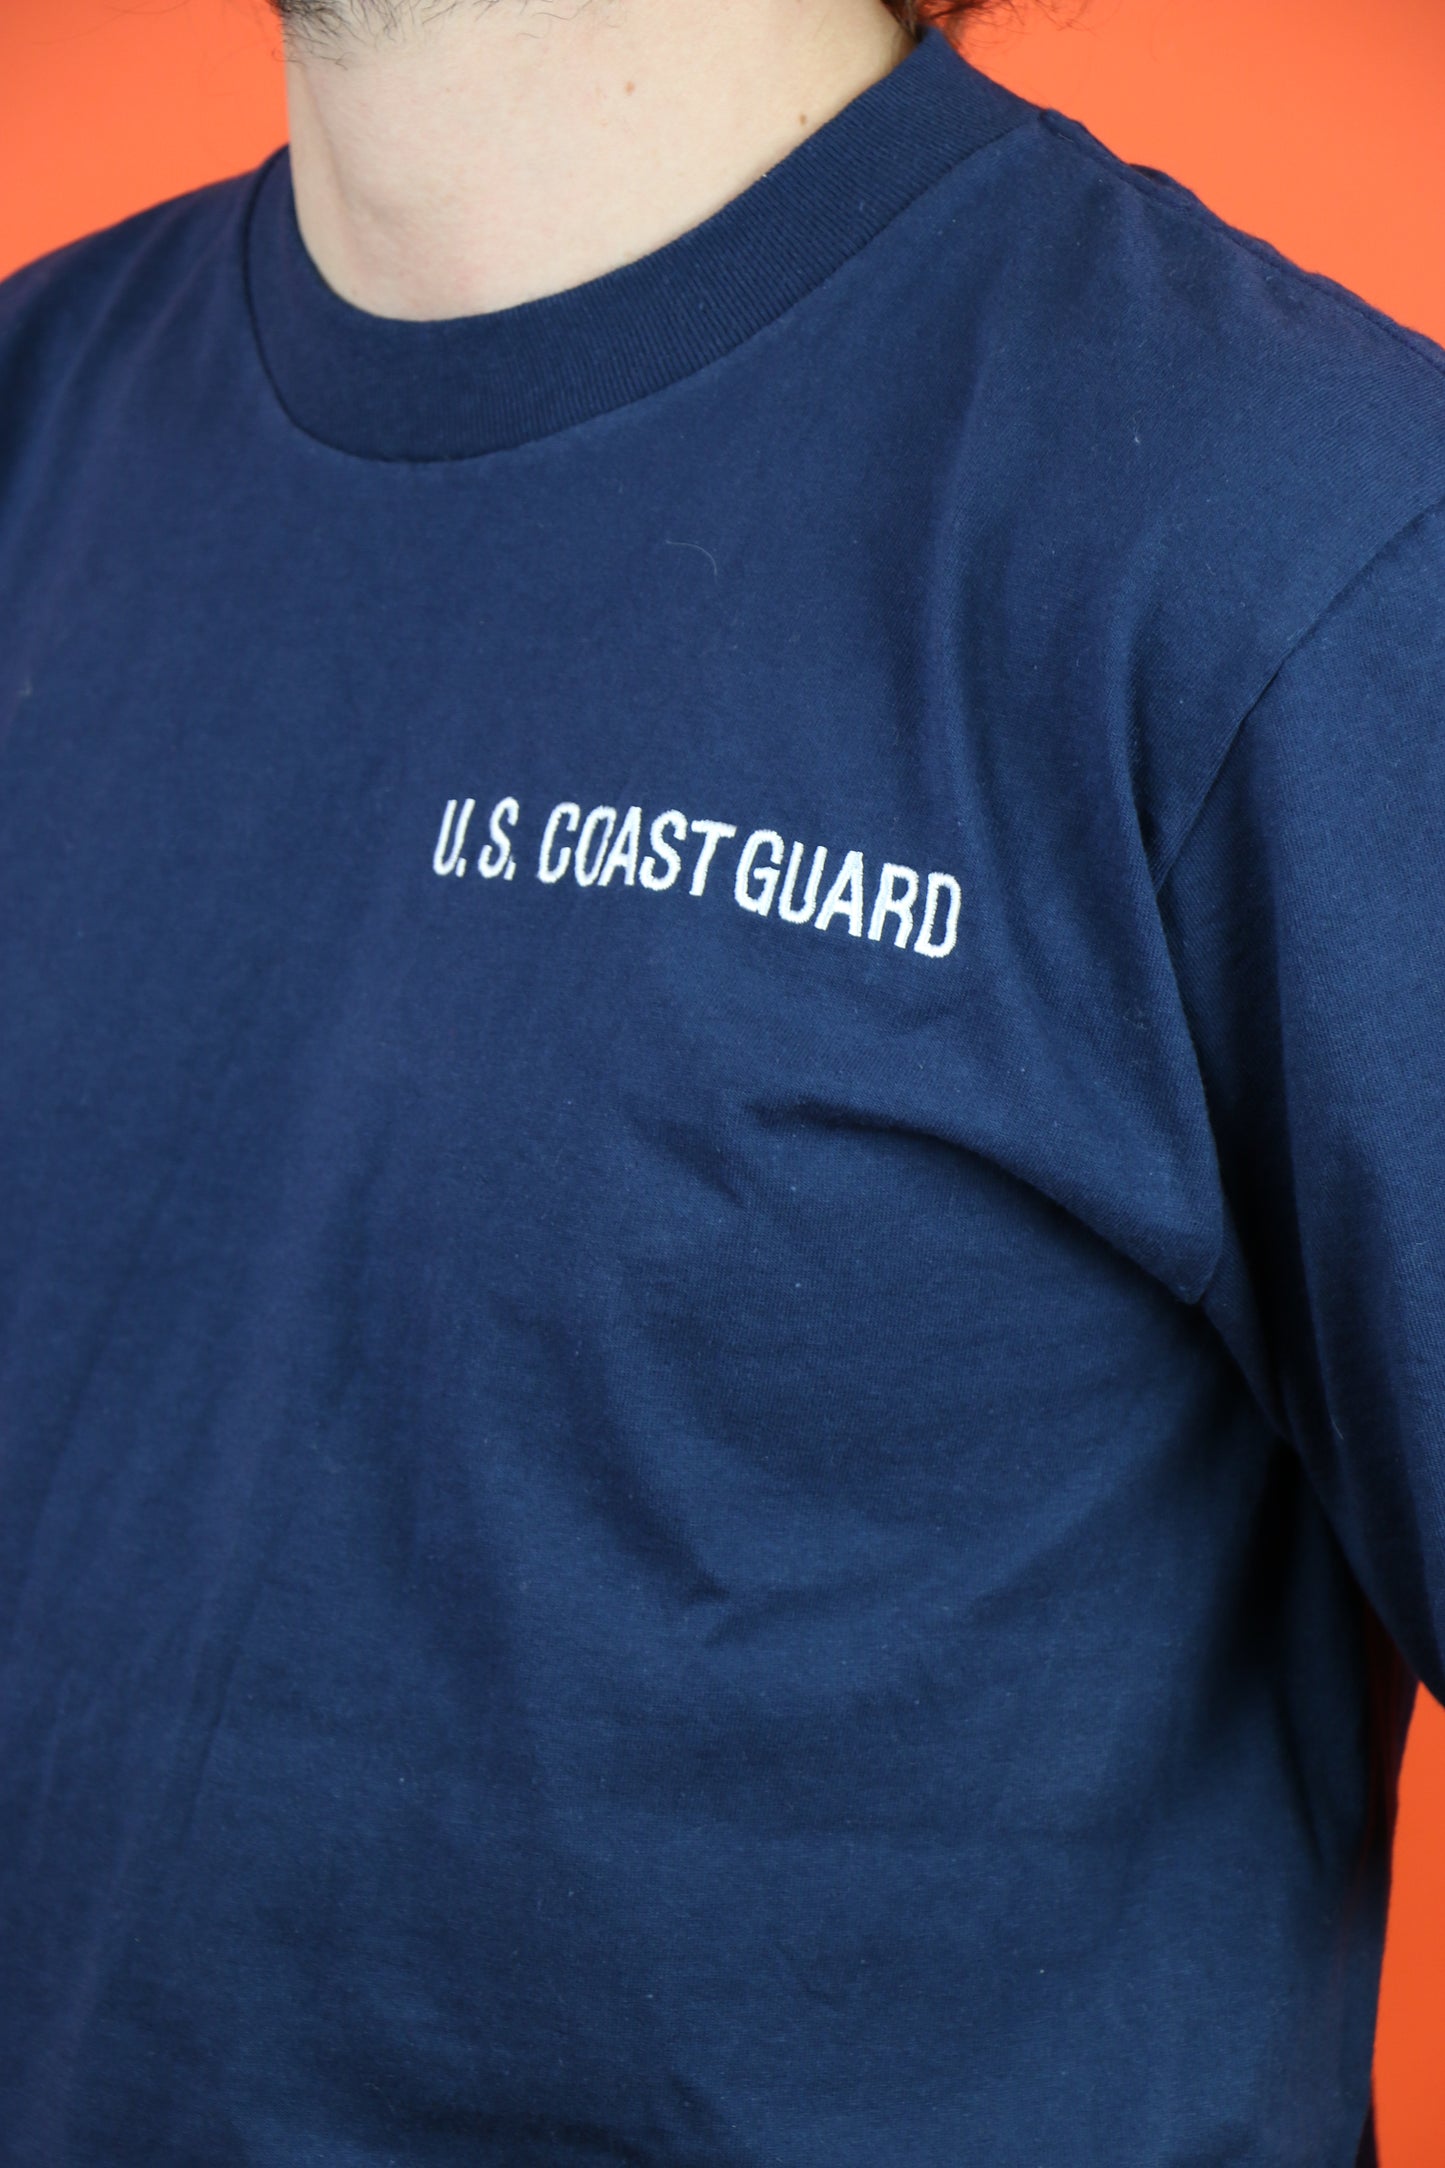 US coast Guard T-Shirt  - vintage clothing clochard92.com